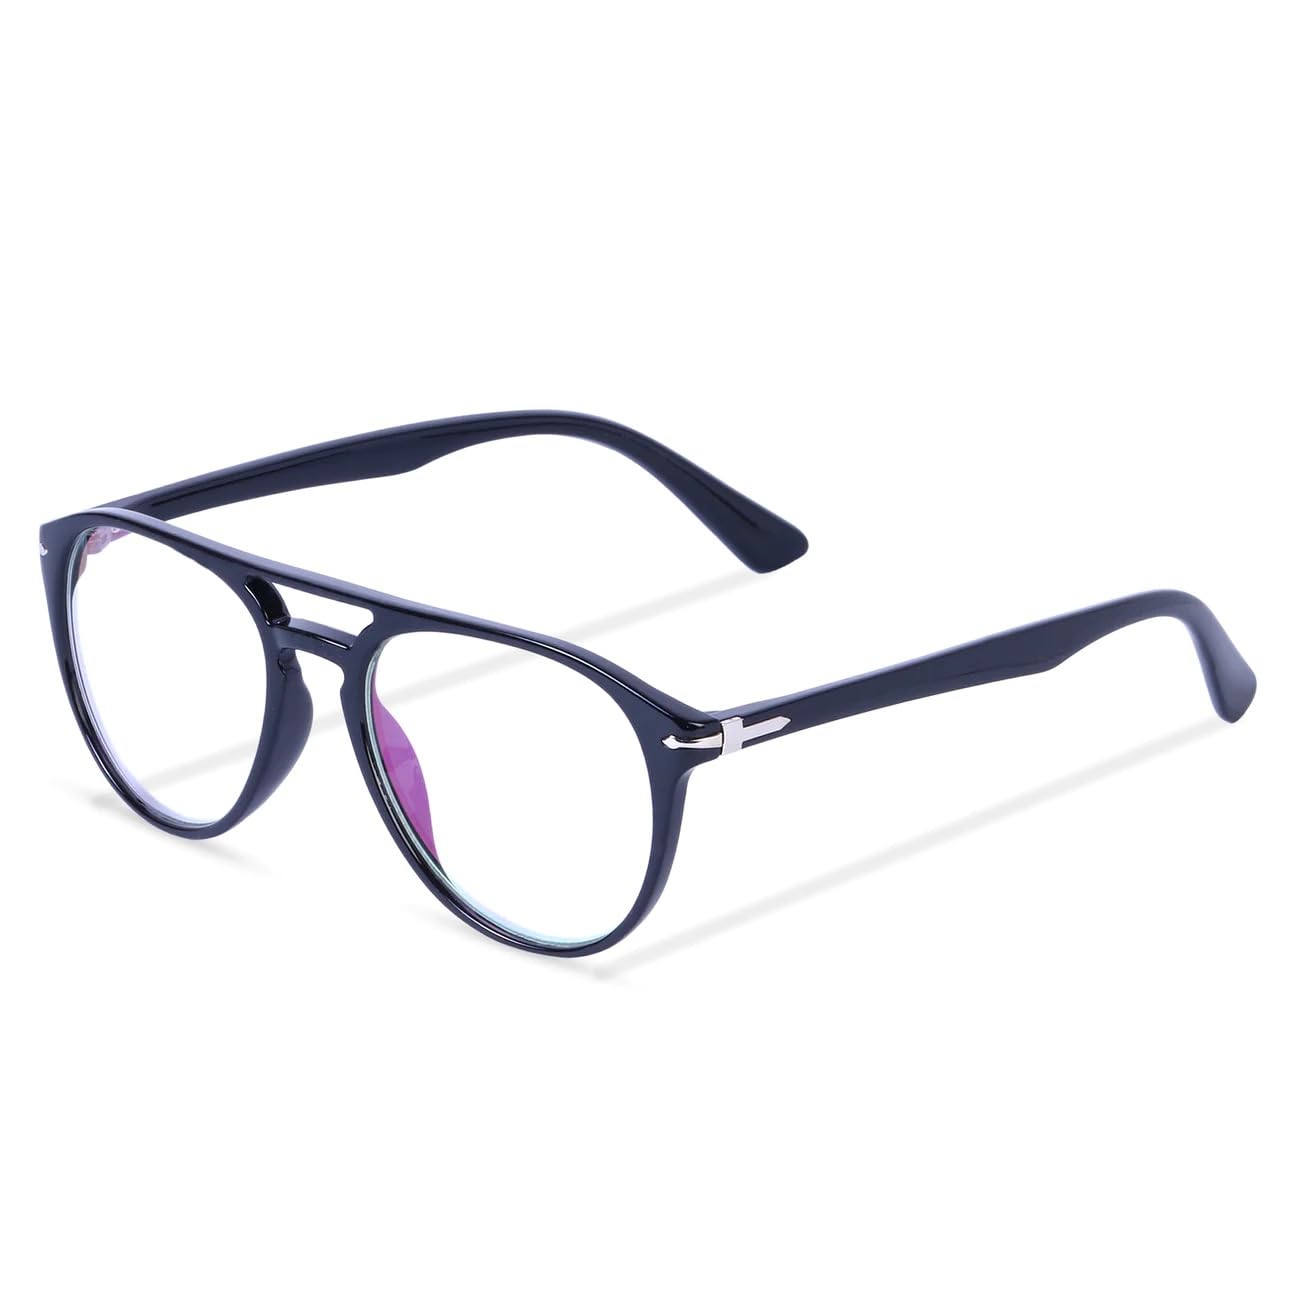 Jodykoes Premium Aviator Style Anti Glare Frame Eyeglasses Eyewear Spectacles (Black)